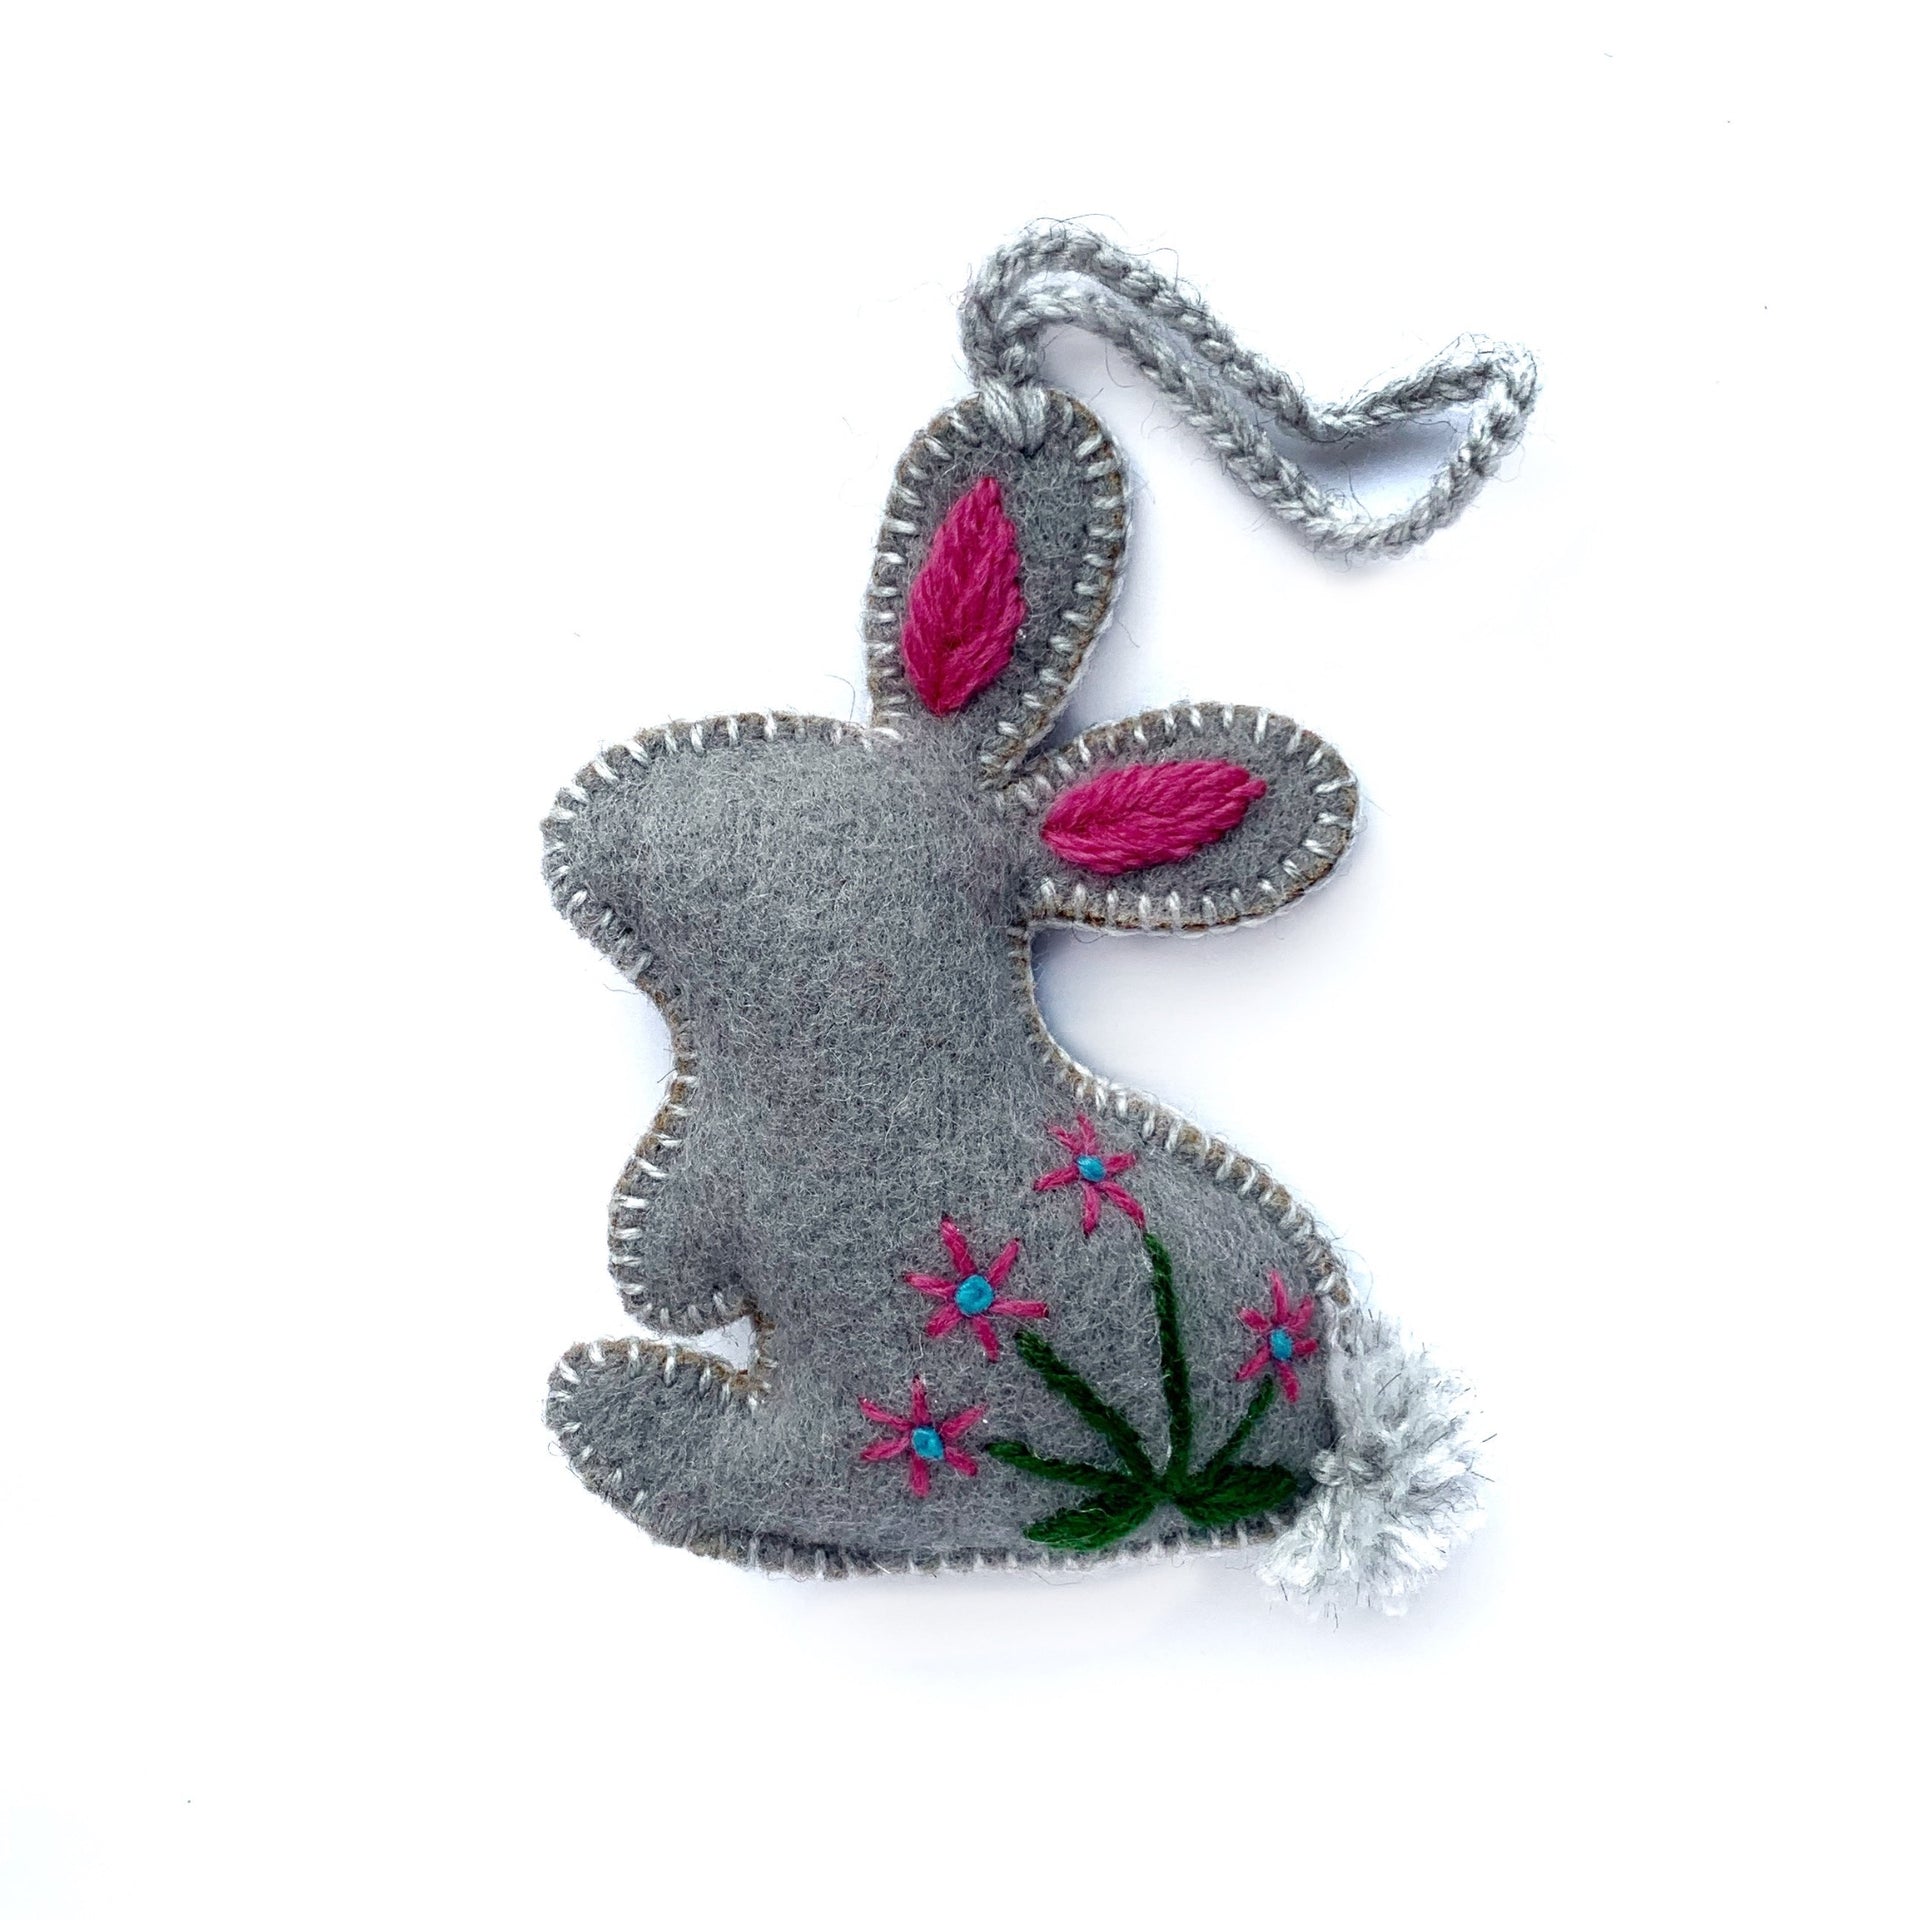 Soft gray Easter Bunny ornament handmade in Peru